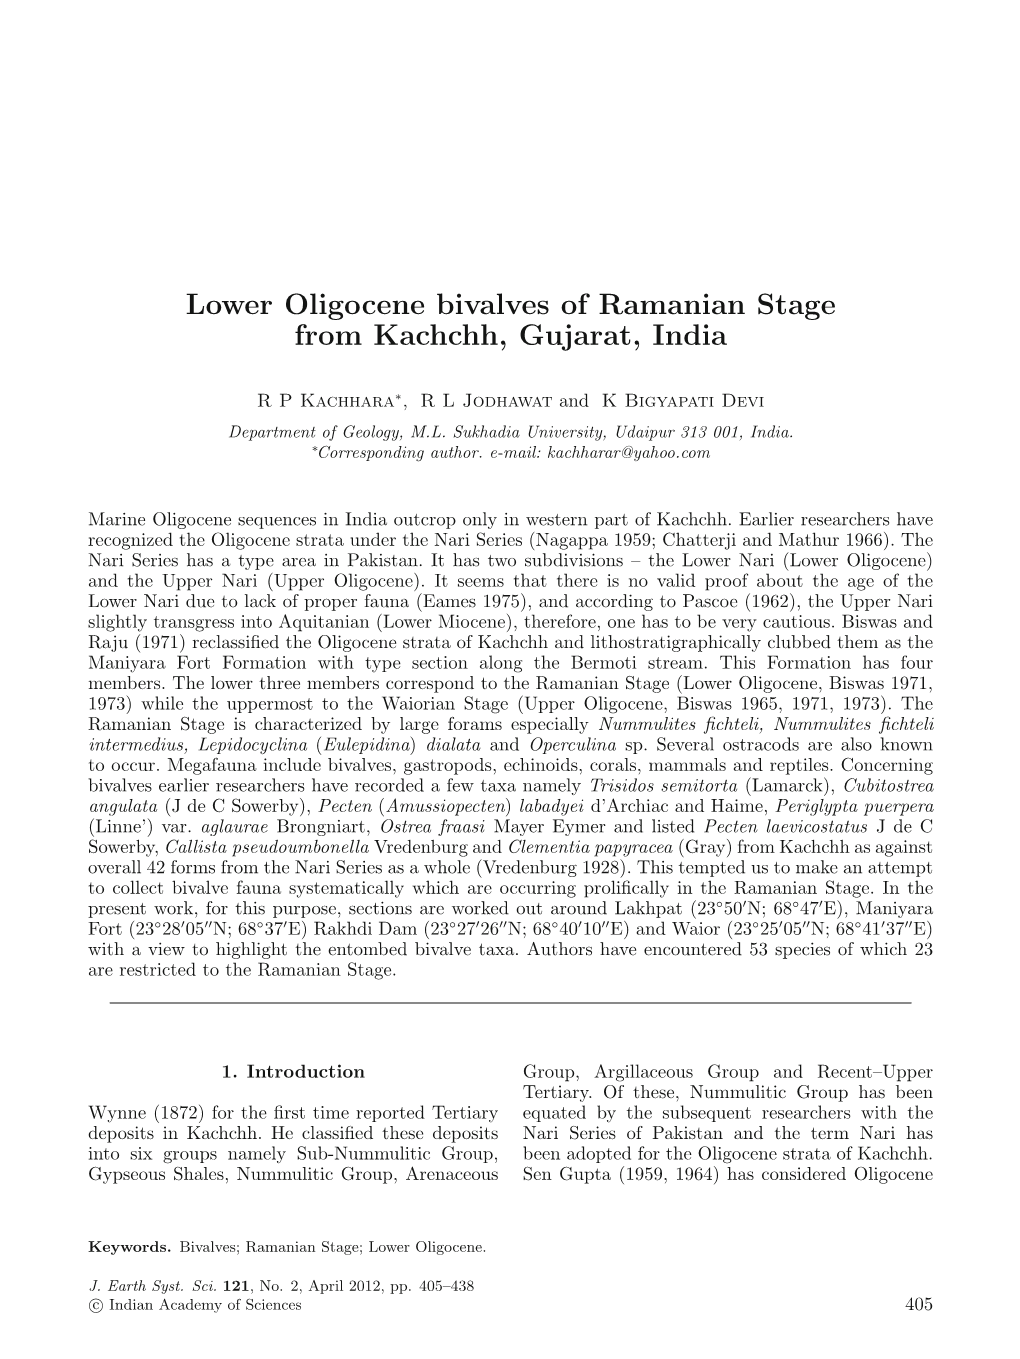 Lower Oligocene Bivalves of Ramanian Stage from Kachchh, Gujarat, India